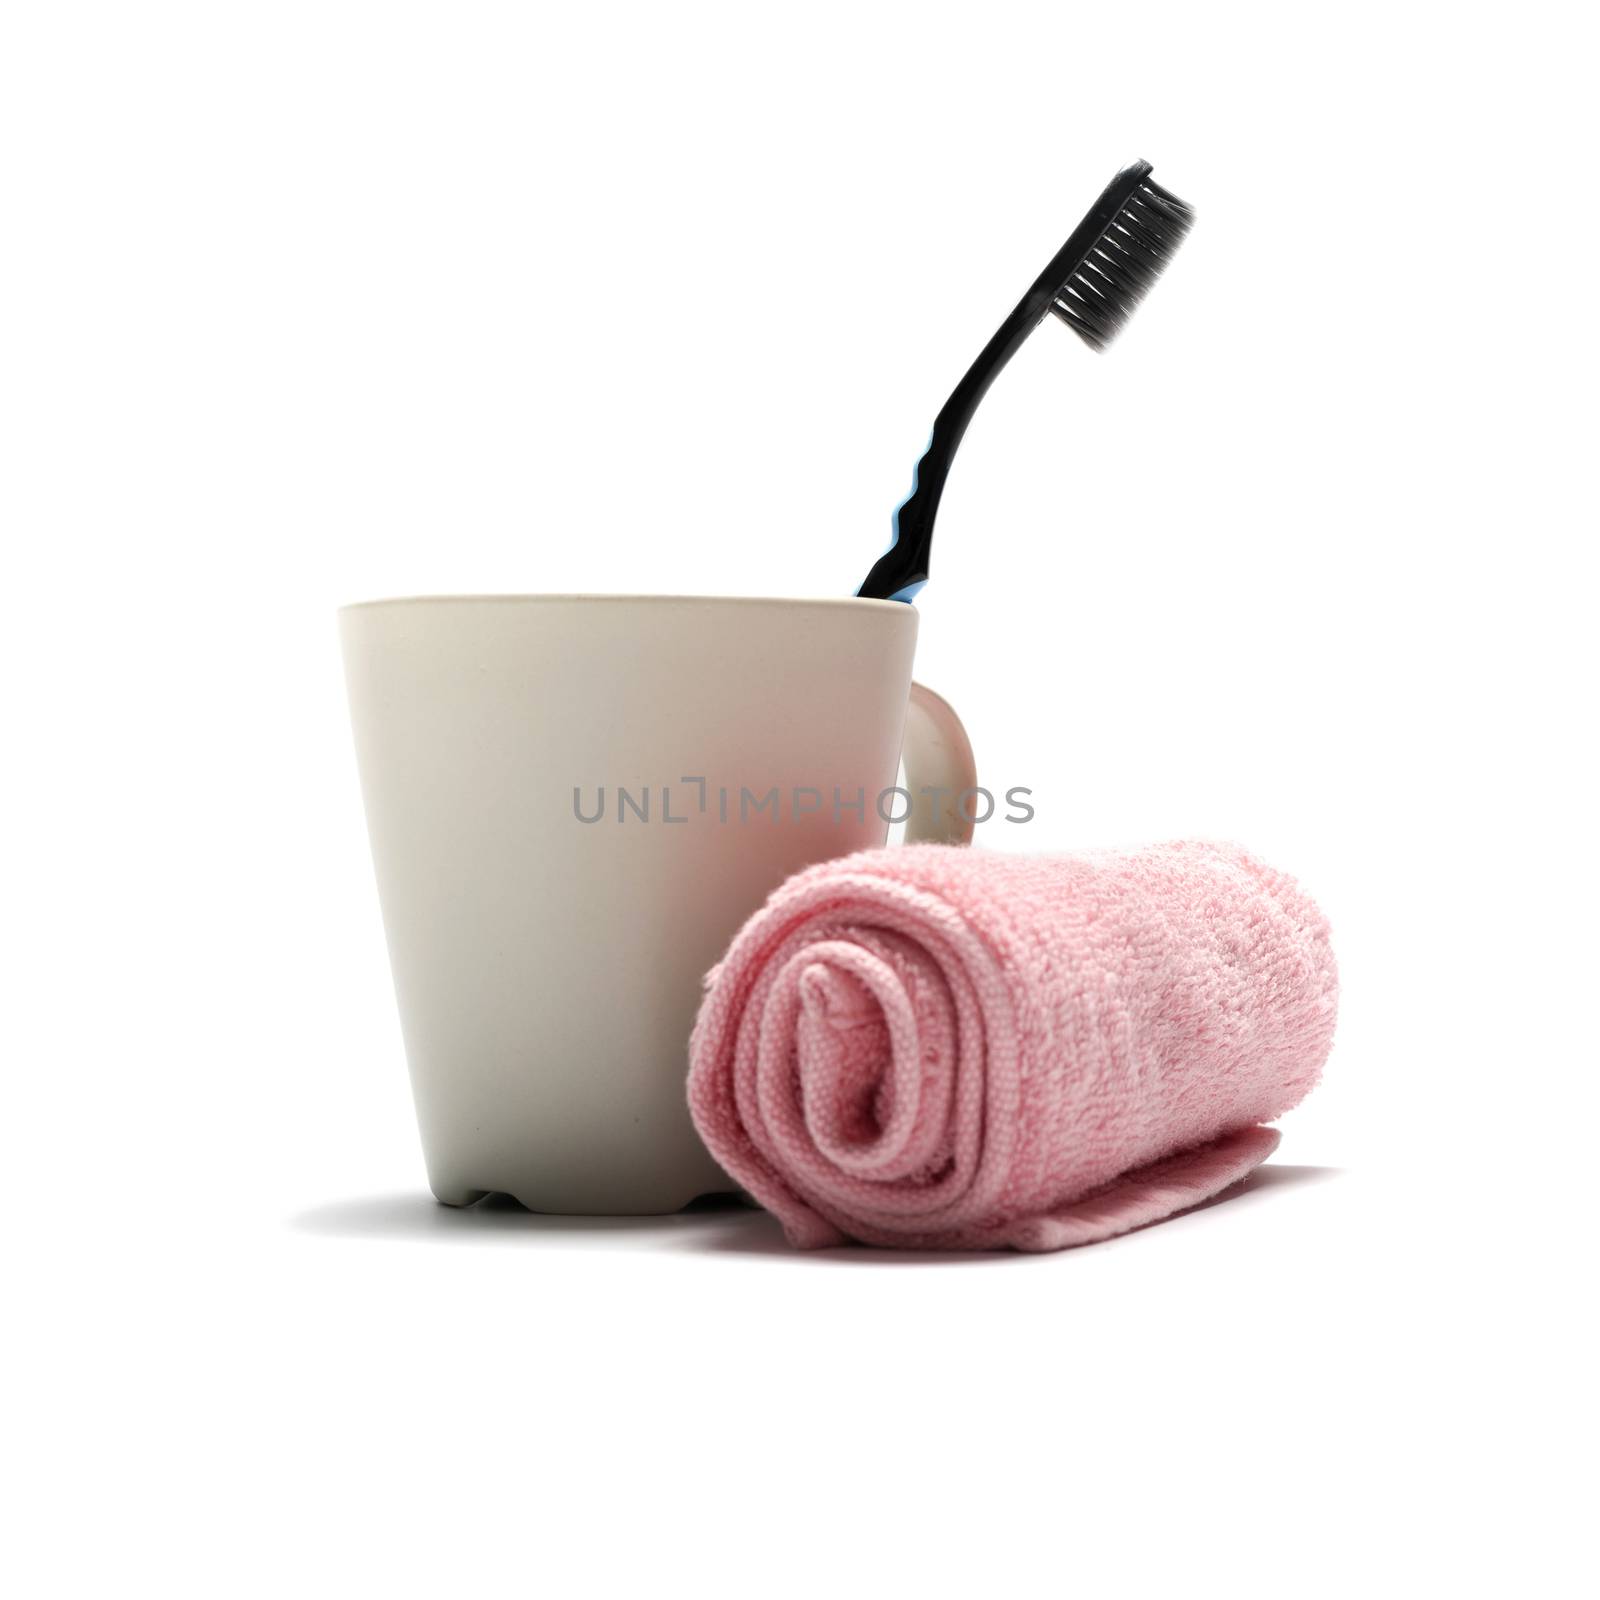 tooth brush and towel with mug by ammza12